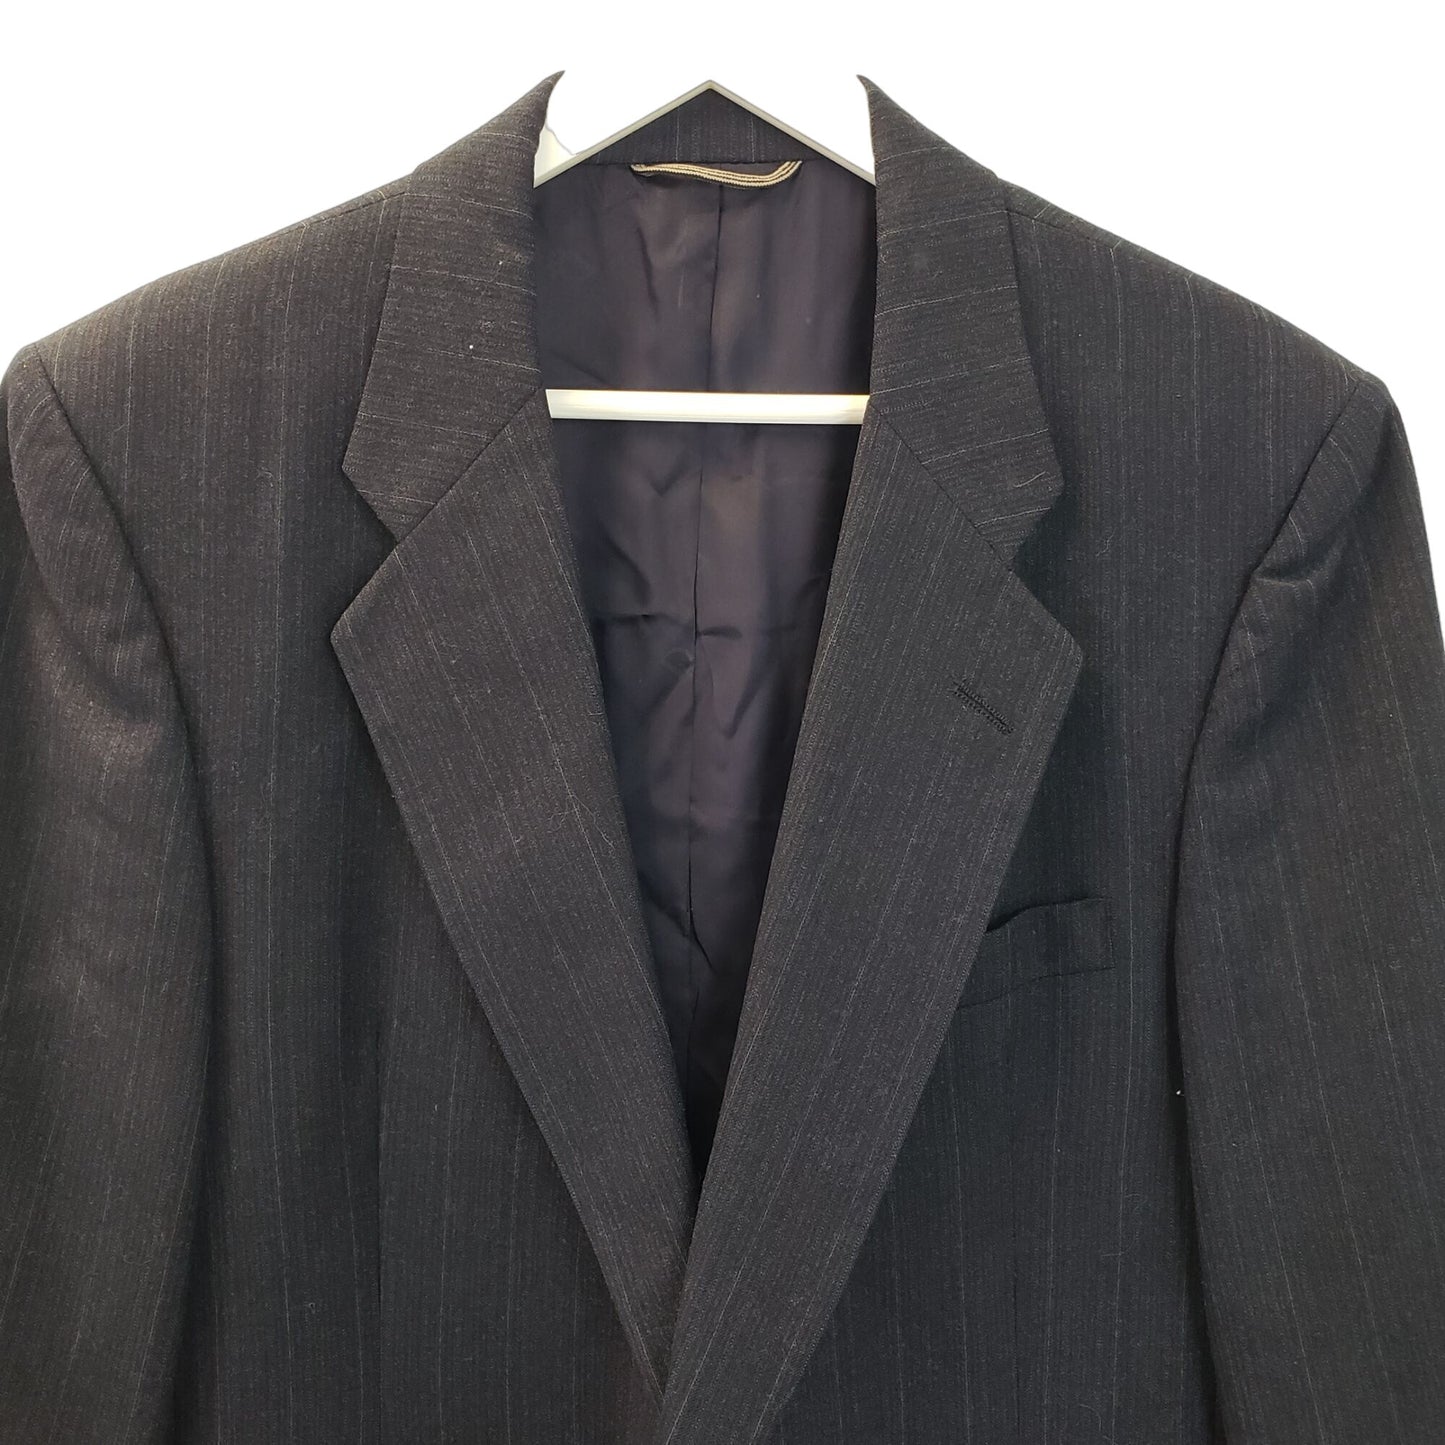 Christian Dior Wool Pinstripe Two Button Sport Coat Blazer Size 44R